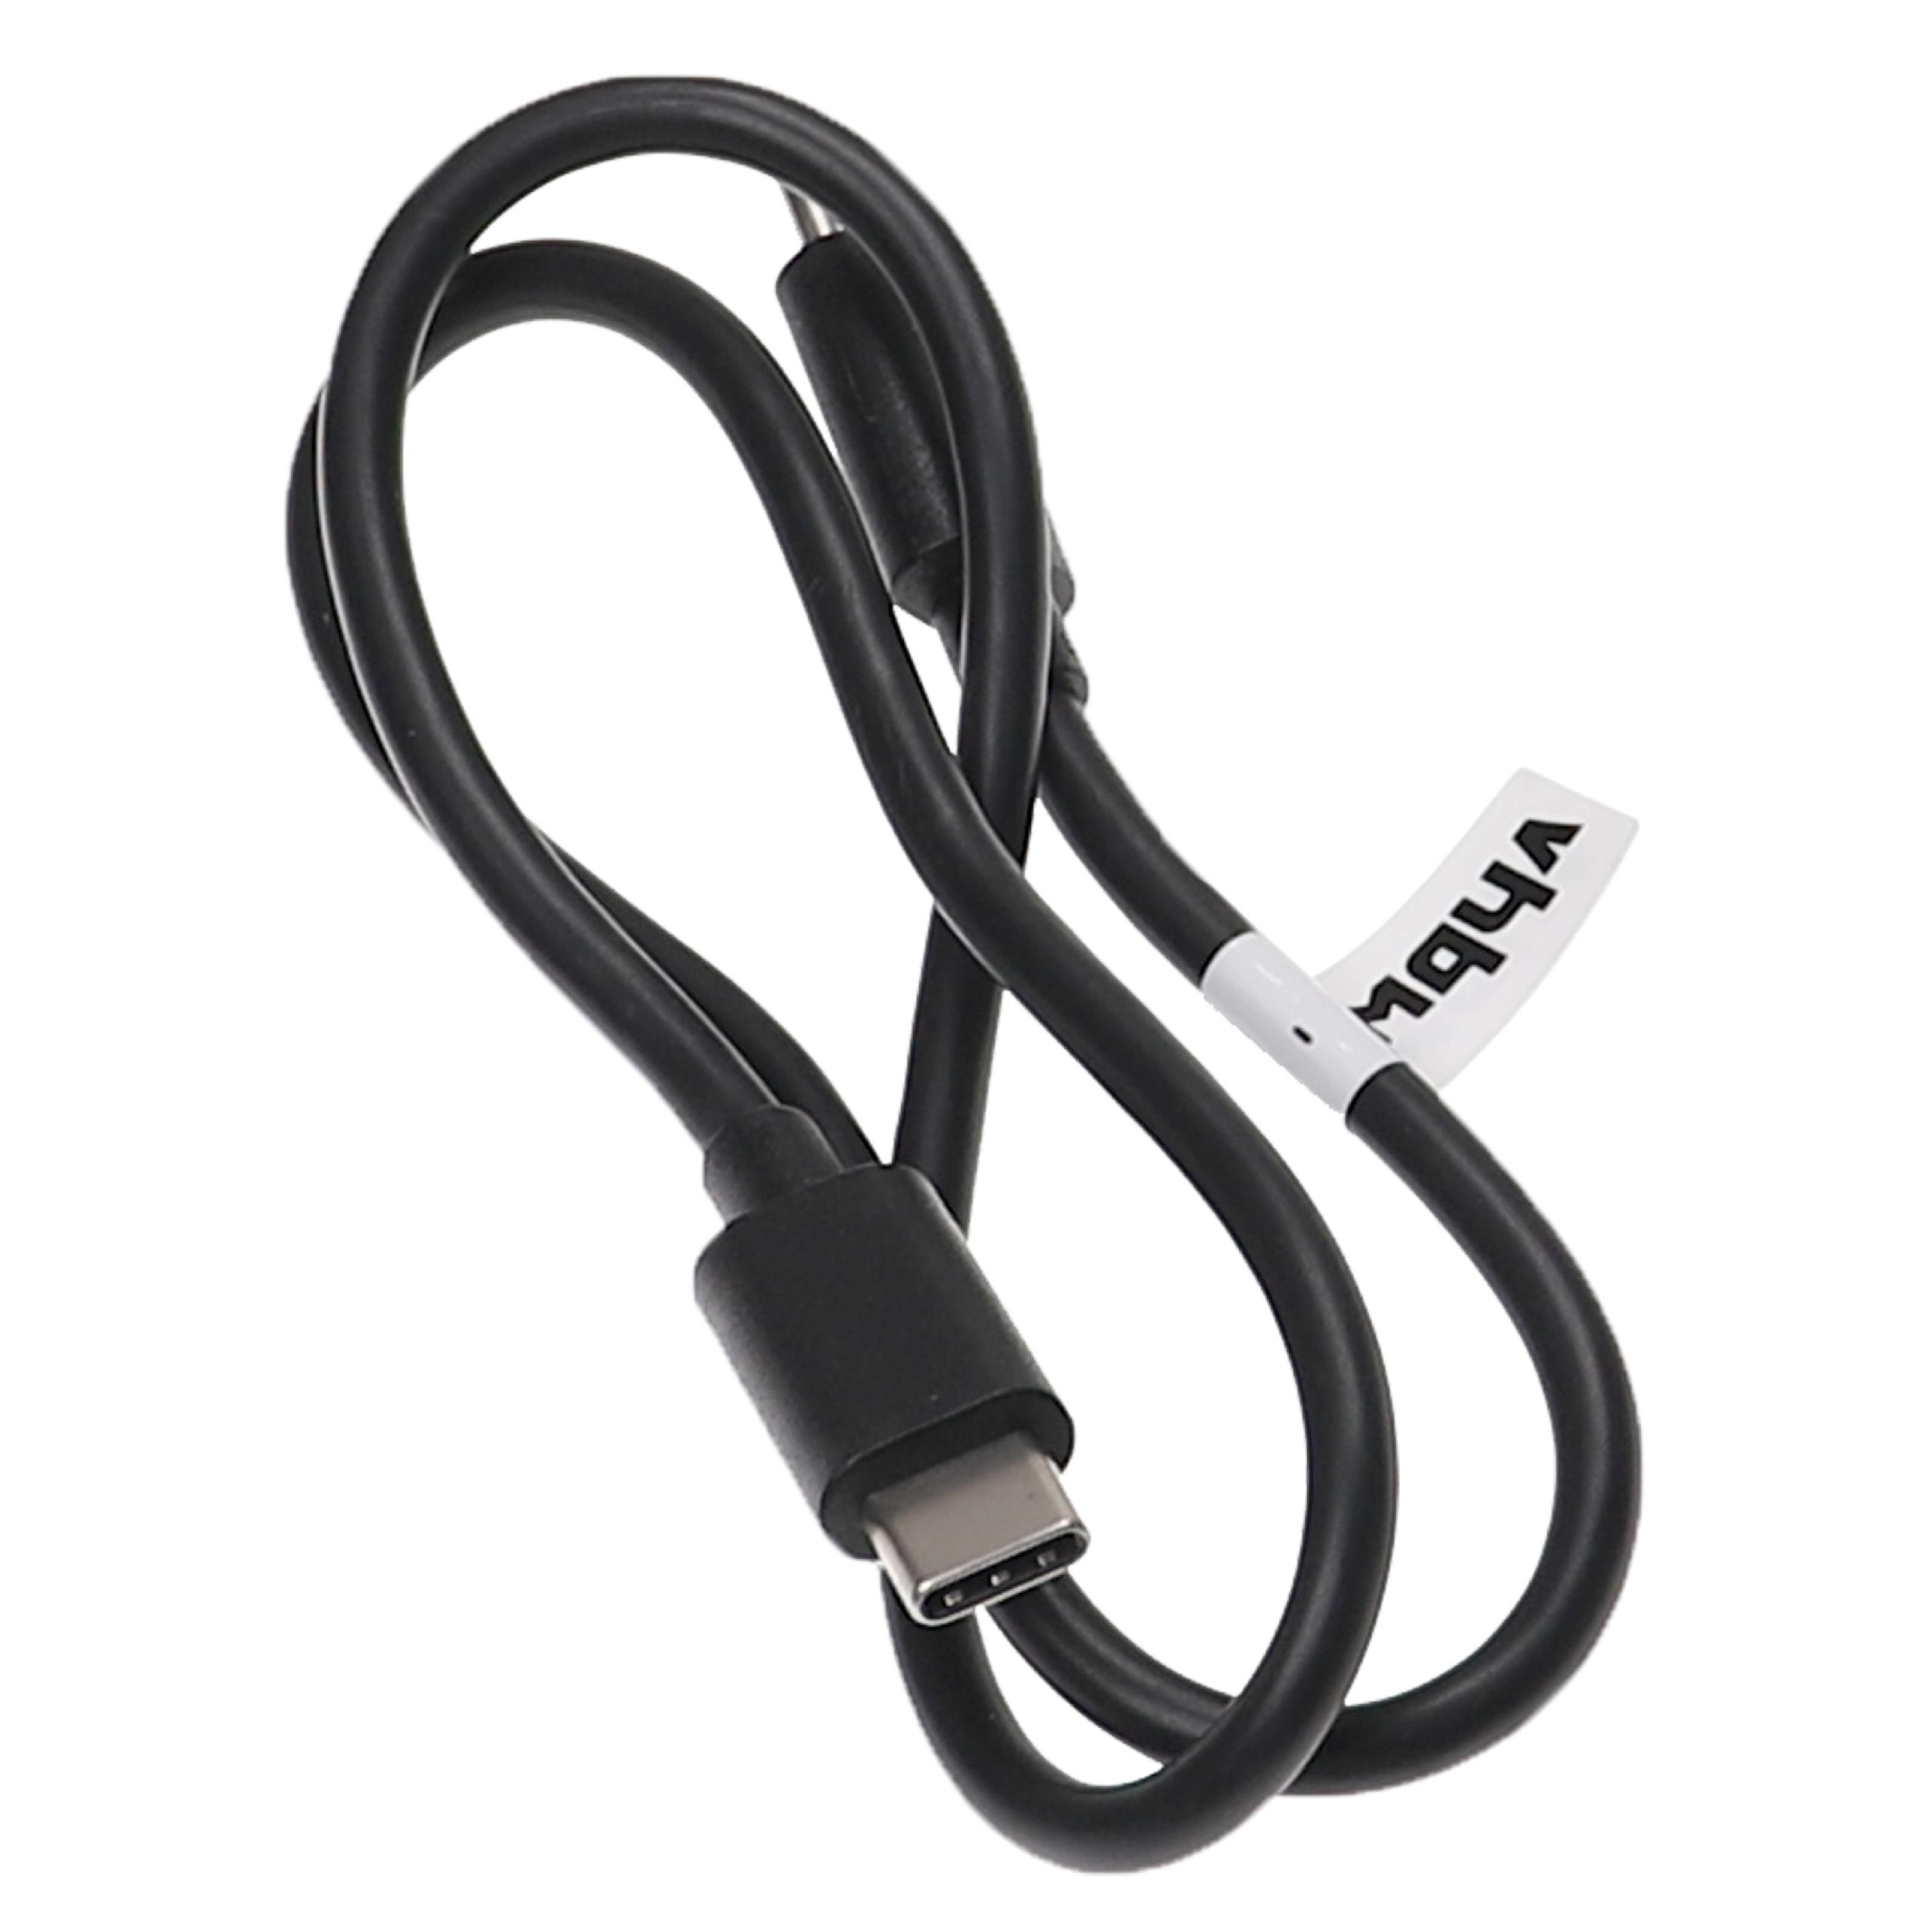 USB Schnell-Ladekabel passend für diverse Laptops, Tablets, Smartphones - USB Kabel 50 cm Schwarz